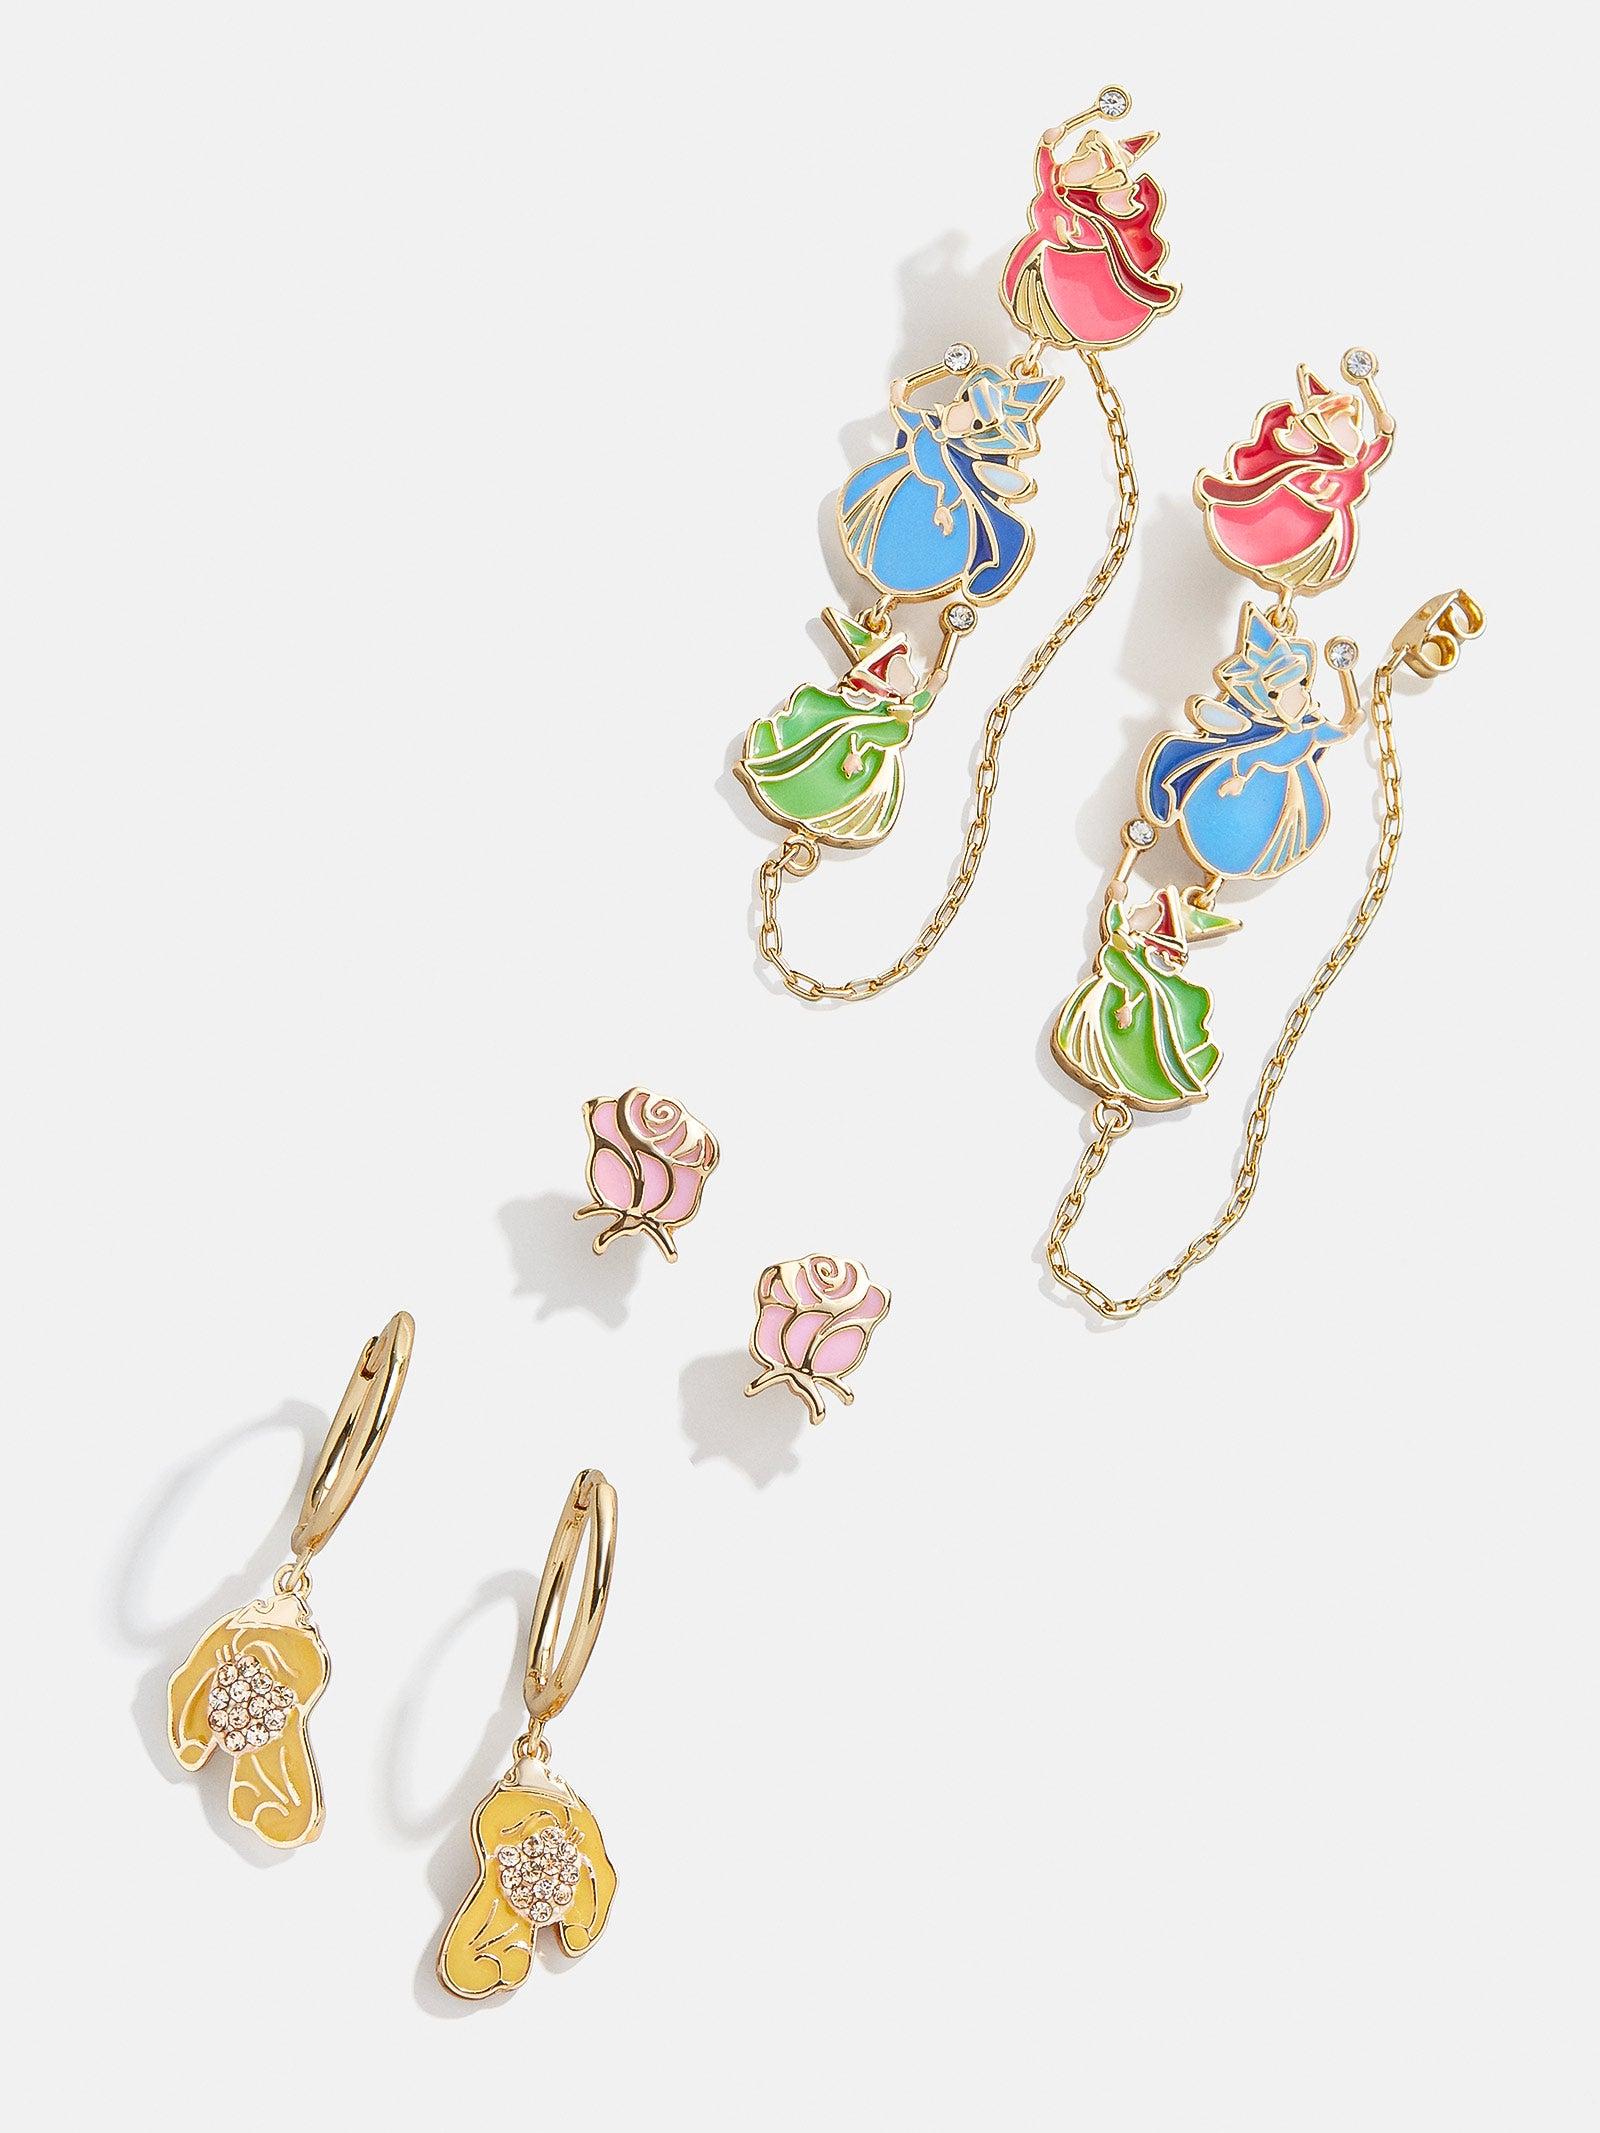 Baublebar Disney Princess Kids' Jewelry Set - Belle